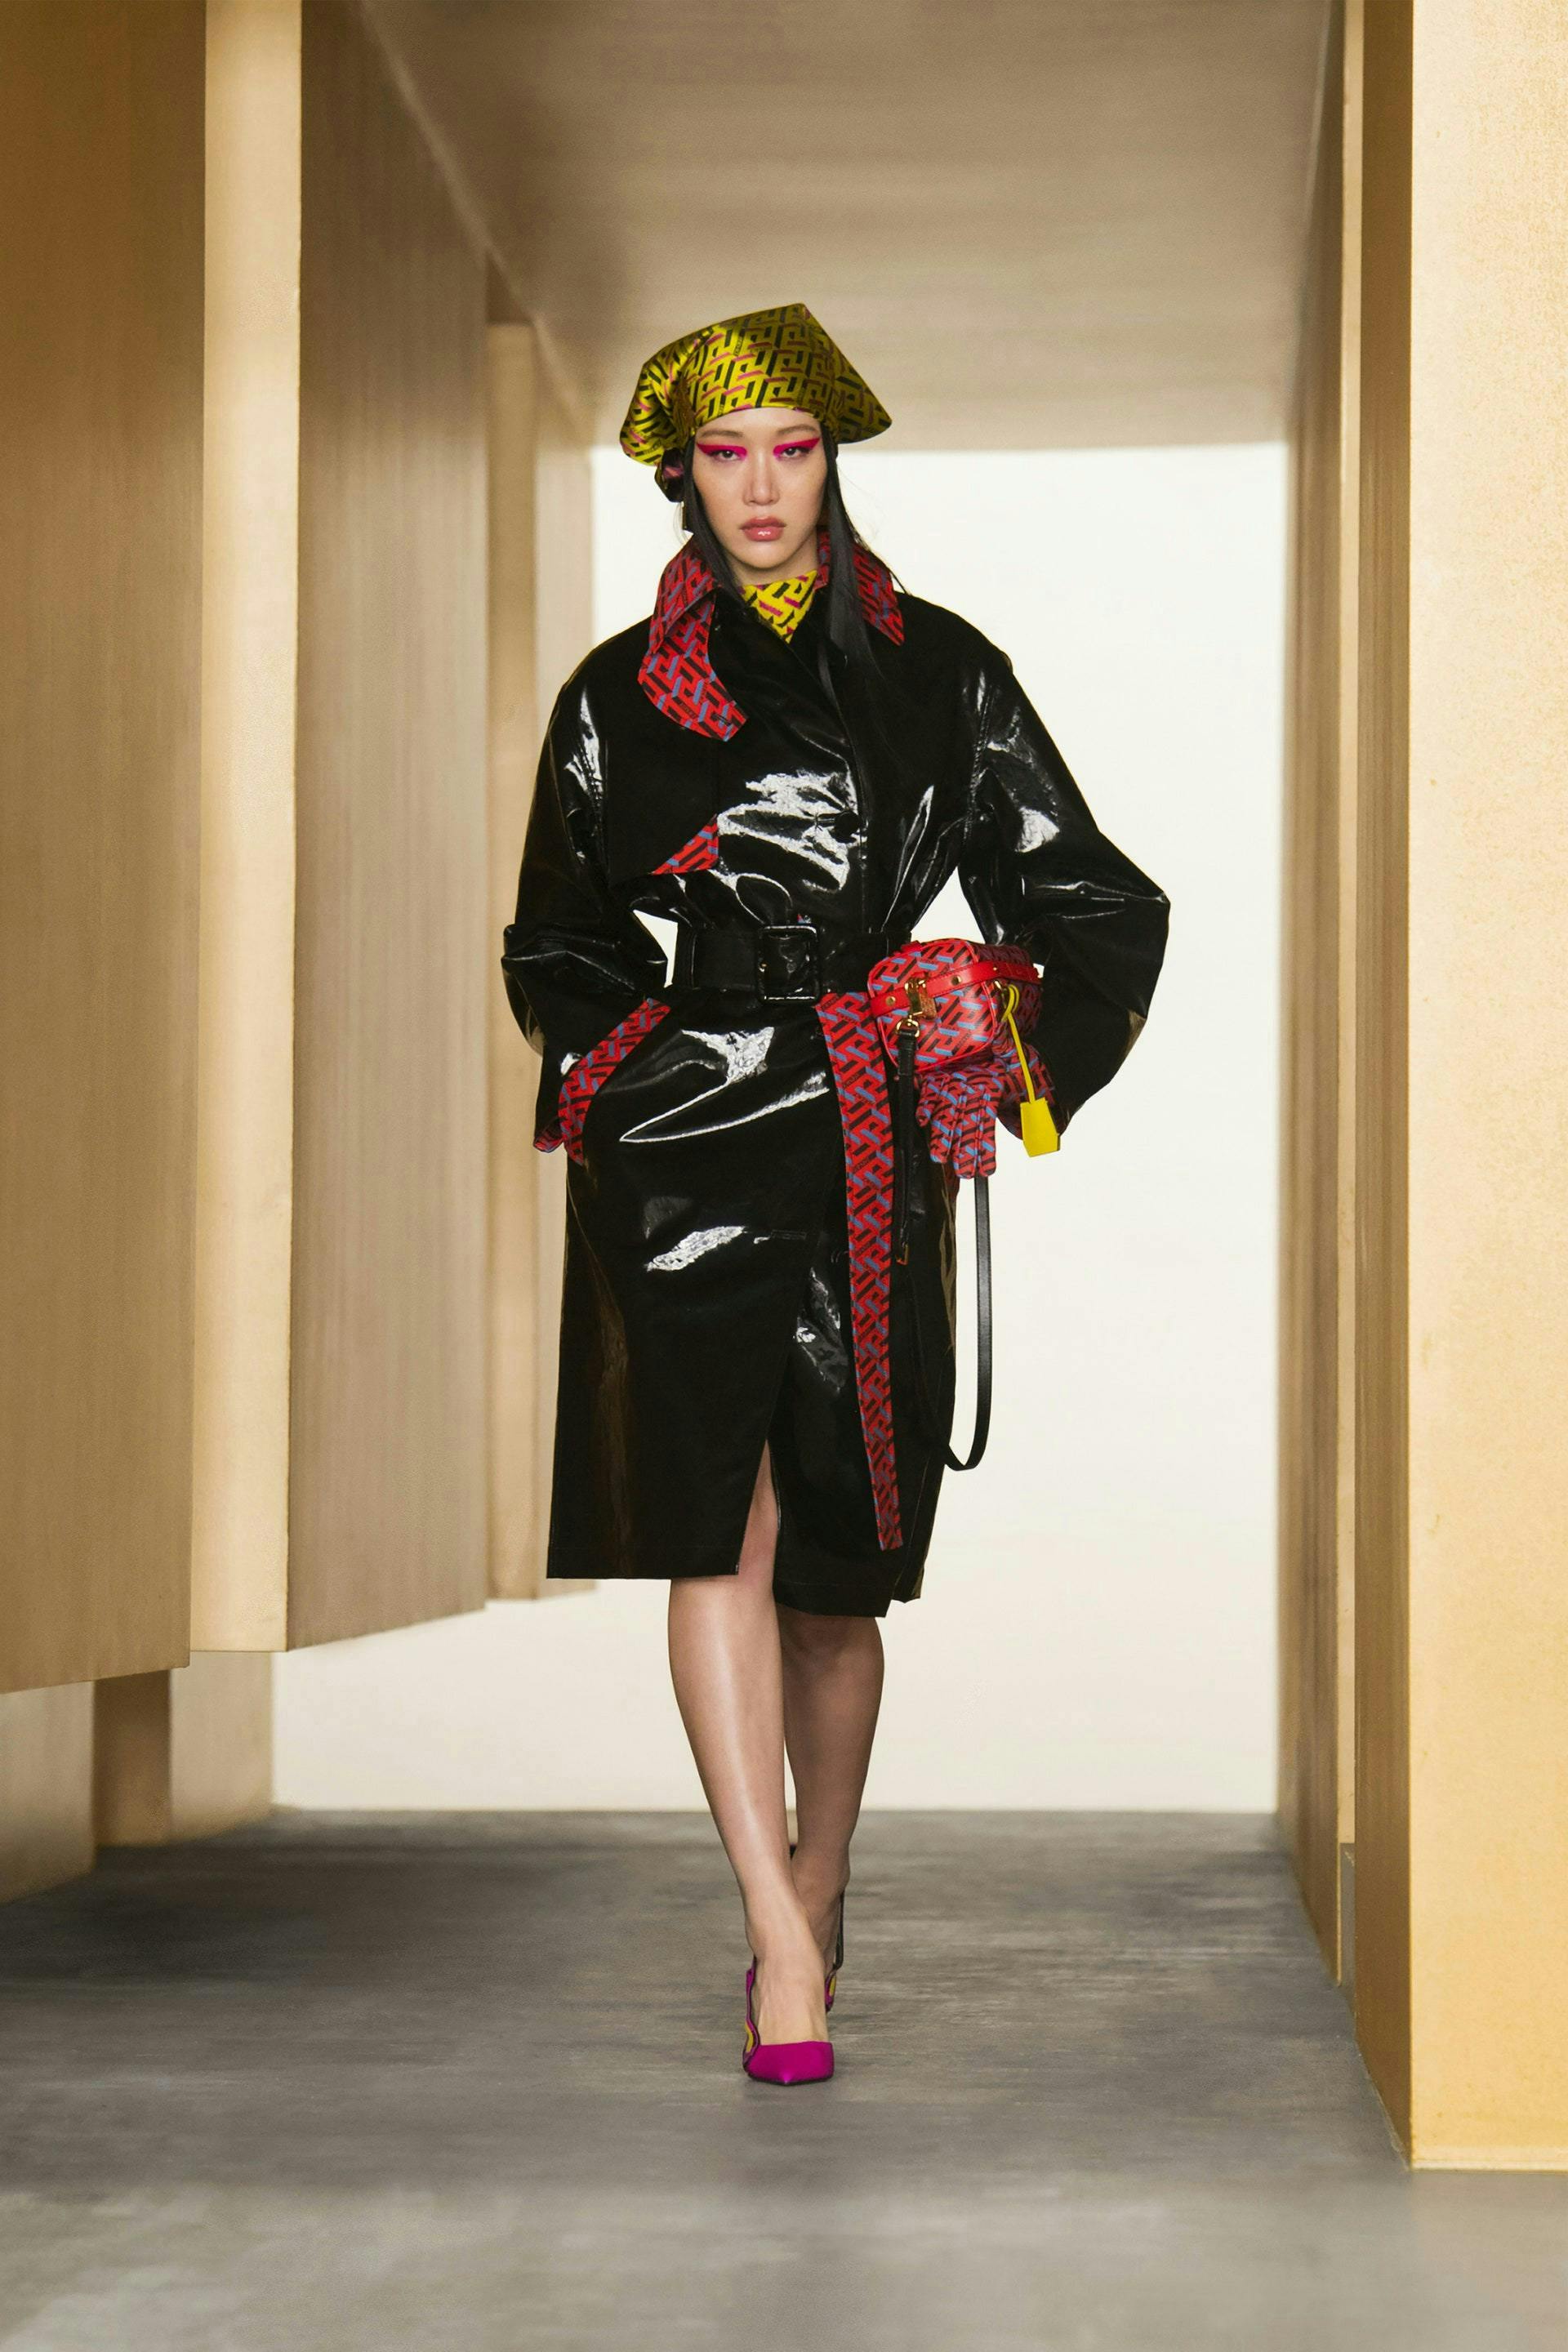 clothing apparel person human robe fashion gown kimono